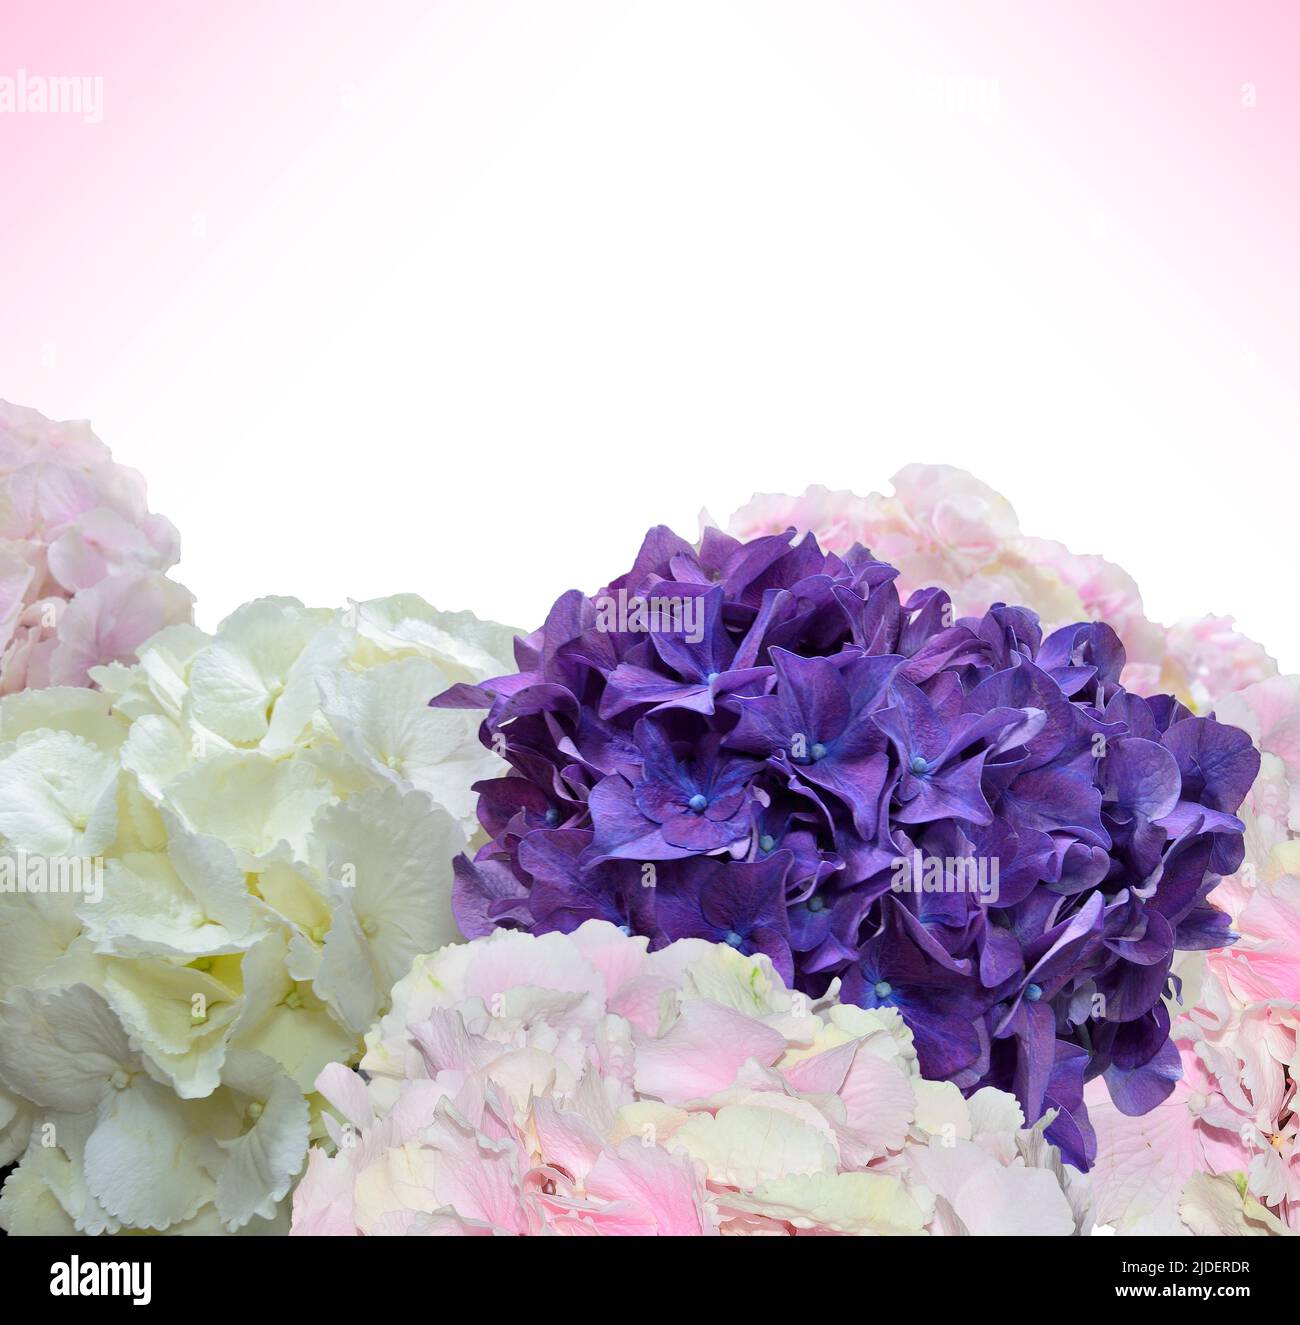 Encantador fondo floral festivo con flores de hortensia aisladas sobre blanco. Flores de hortensias blancas, rosadas claras y moradas cerca, espacio para texto Foto de stock